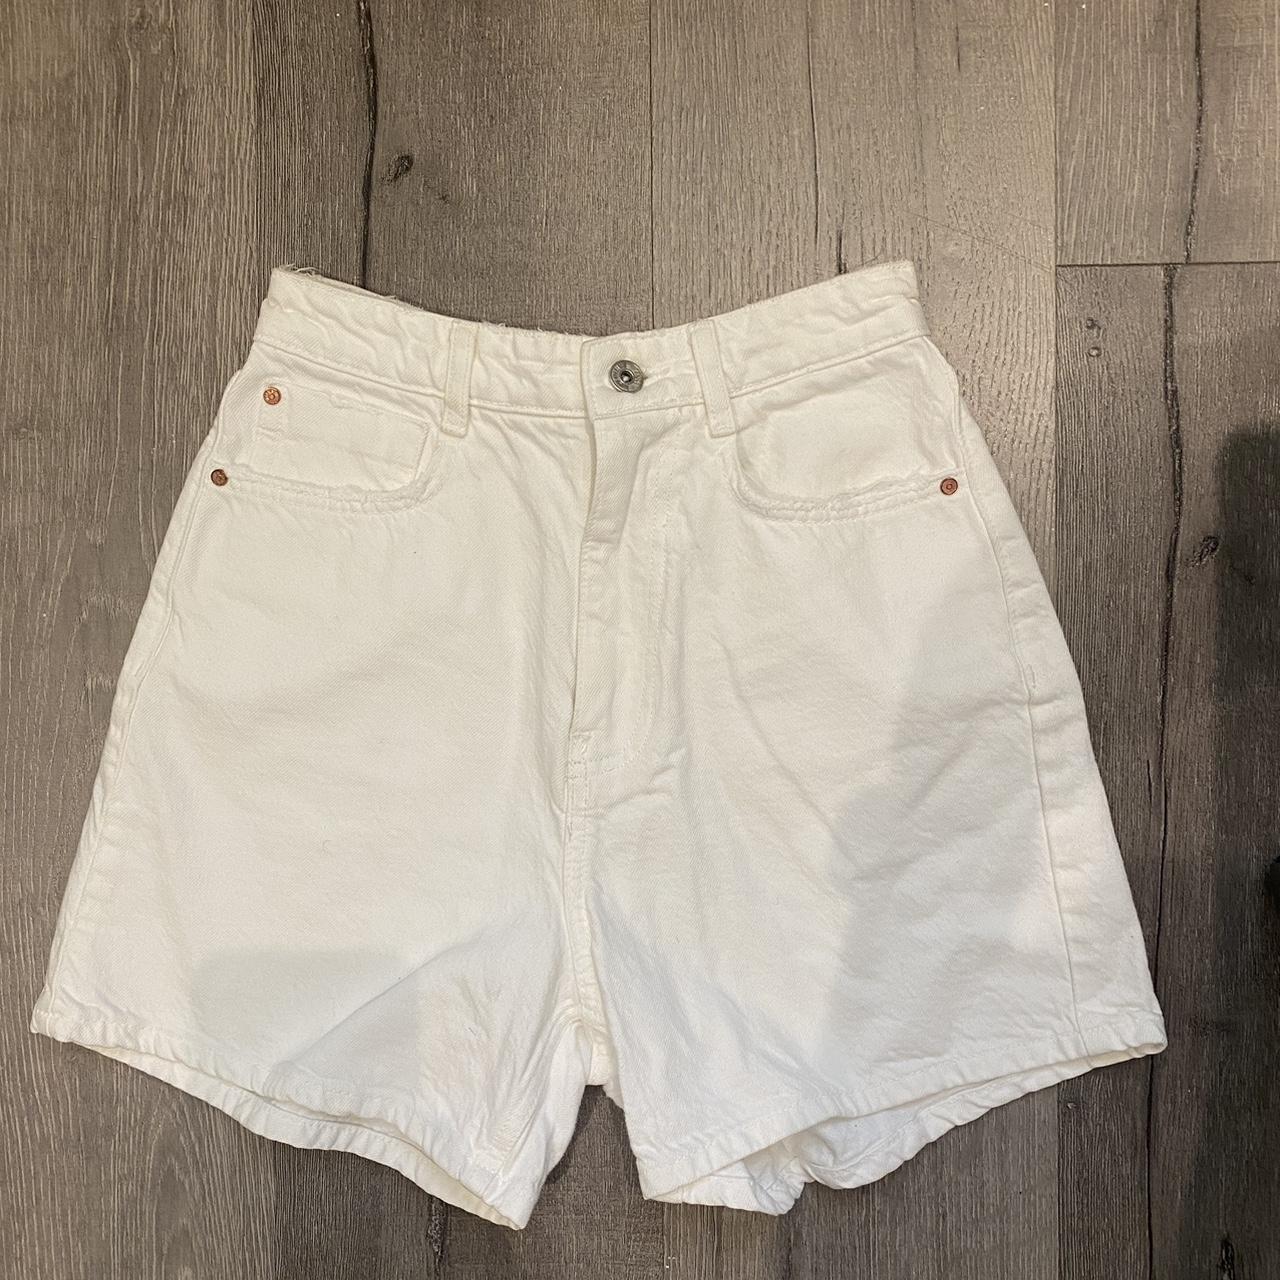 white bermuda jean shorts. perfect for summer, runs... - Depop